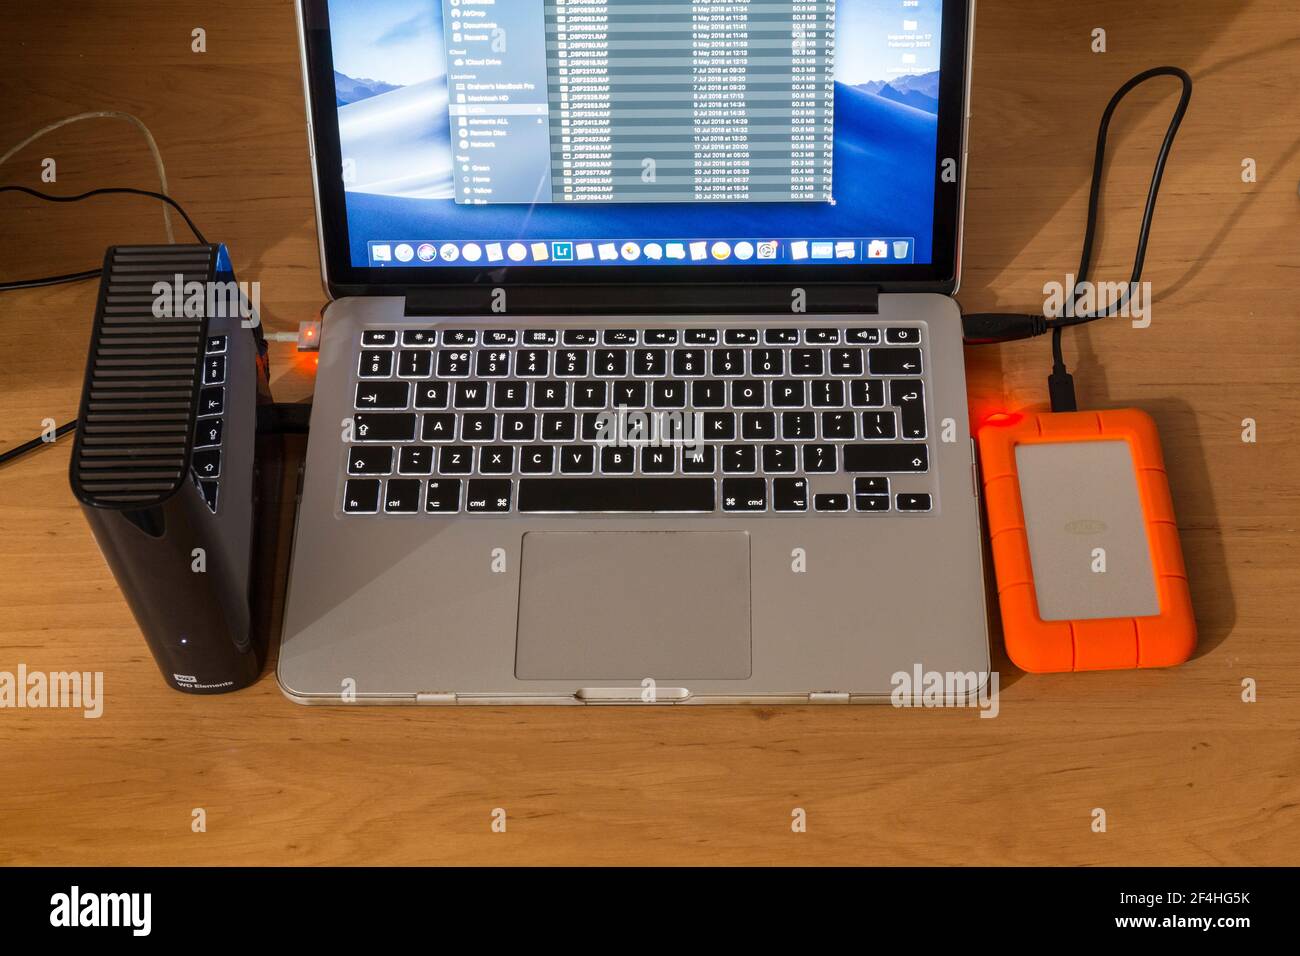 Laptop-Computer mit zwei verschiedenen externen Festplatten angeschlossen. Daten werden gesichert. Stockfoto